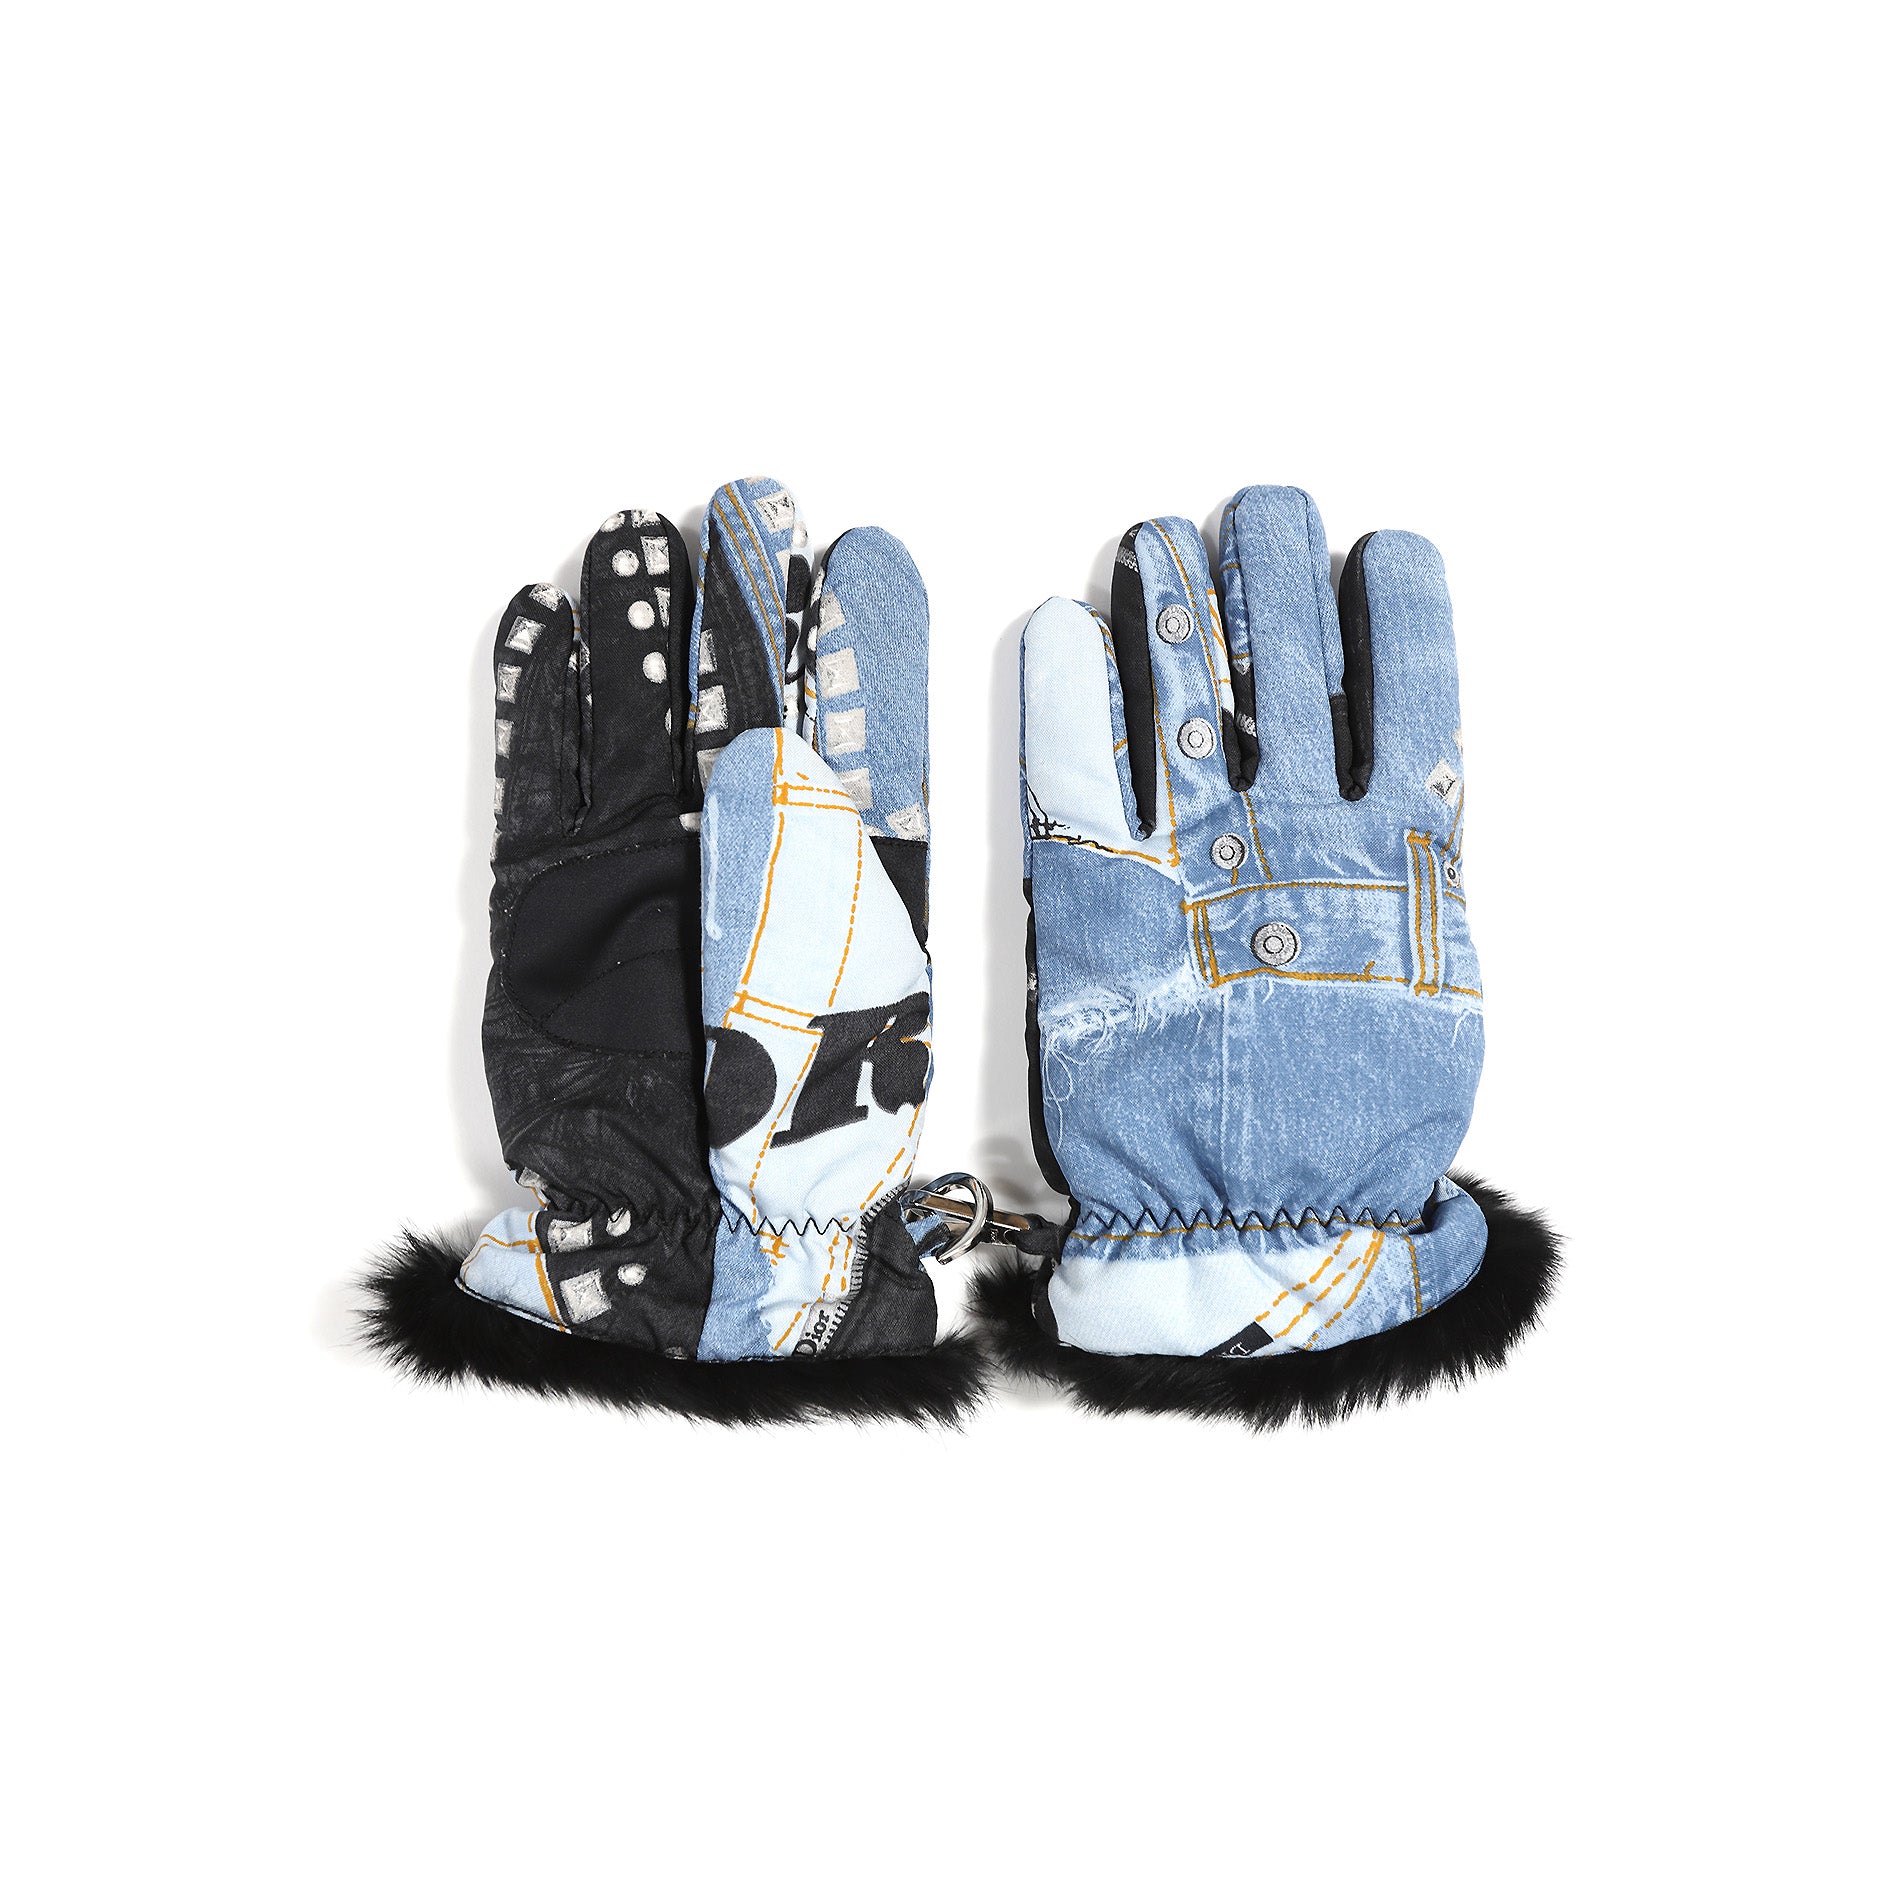 Christian Dior FW04 Trompe L'Oil Fur Gloves by John Galliano